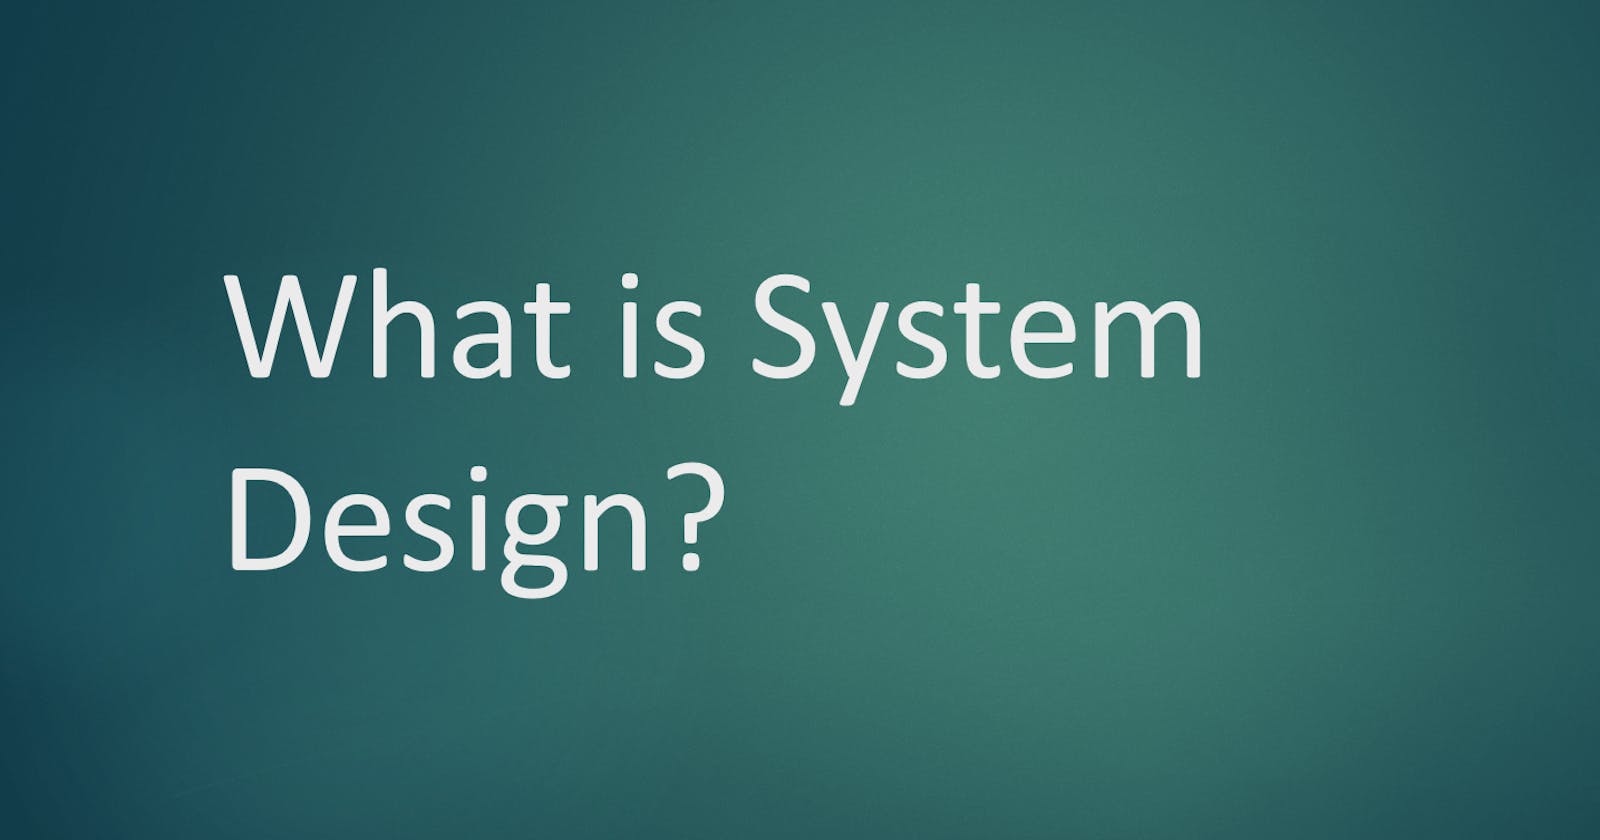 System Design: Overview